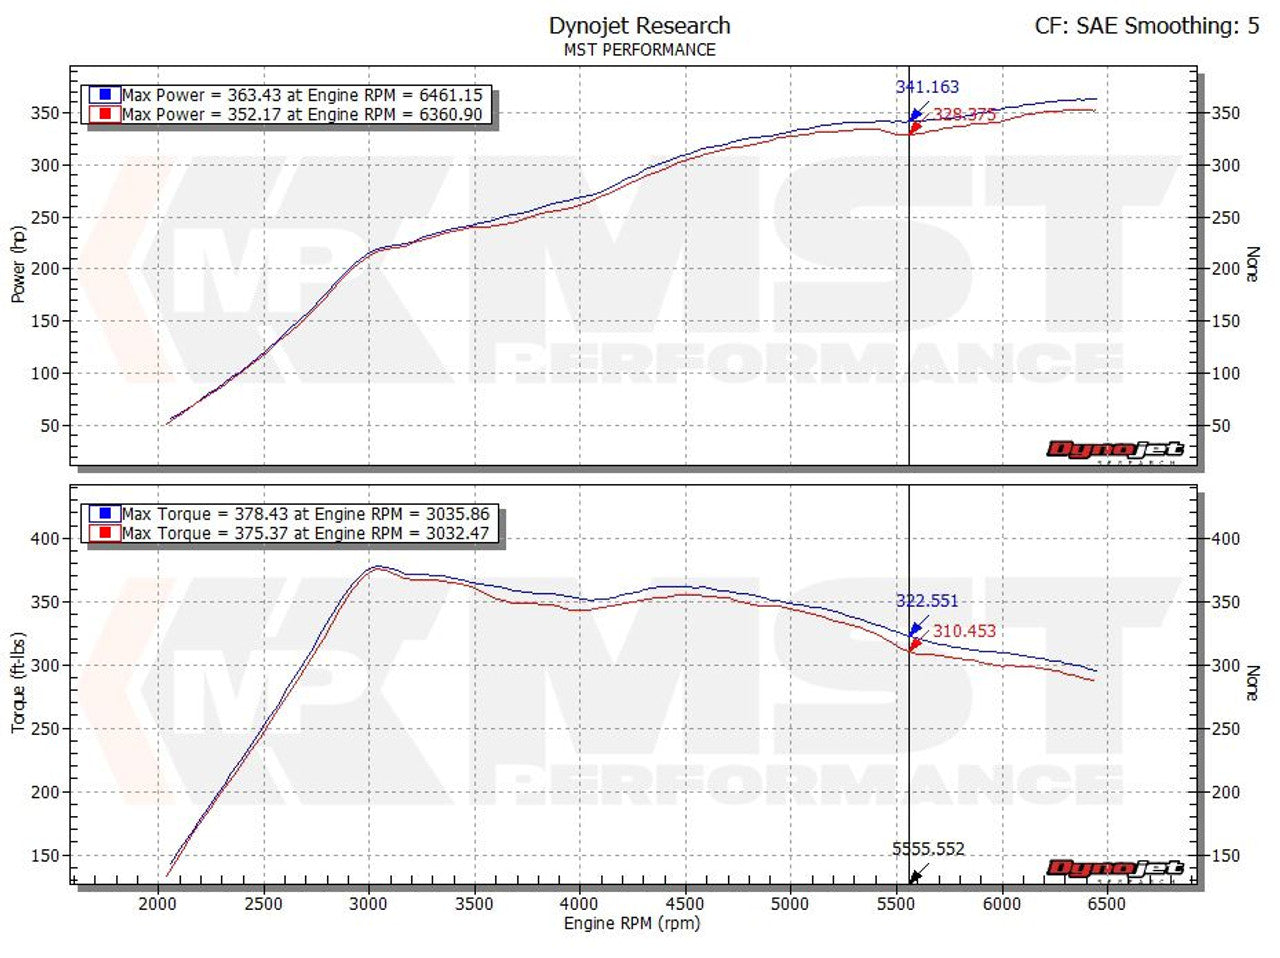 MST Performance Intake Hose & Oversize Turbo Inlet - Seat Leon Mk3 1.8 2.0 TSI